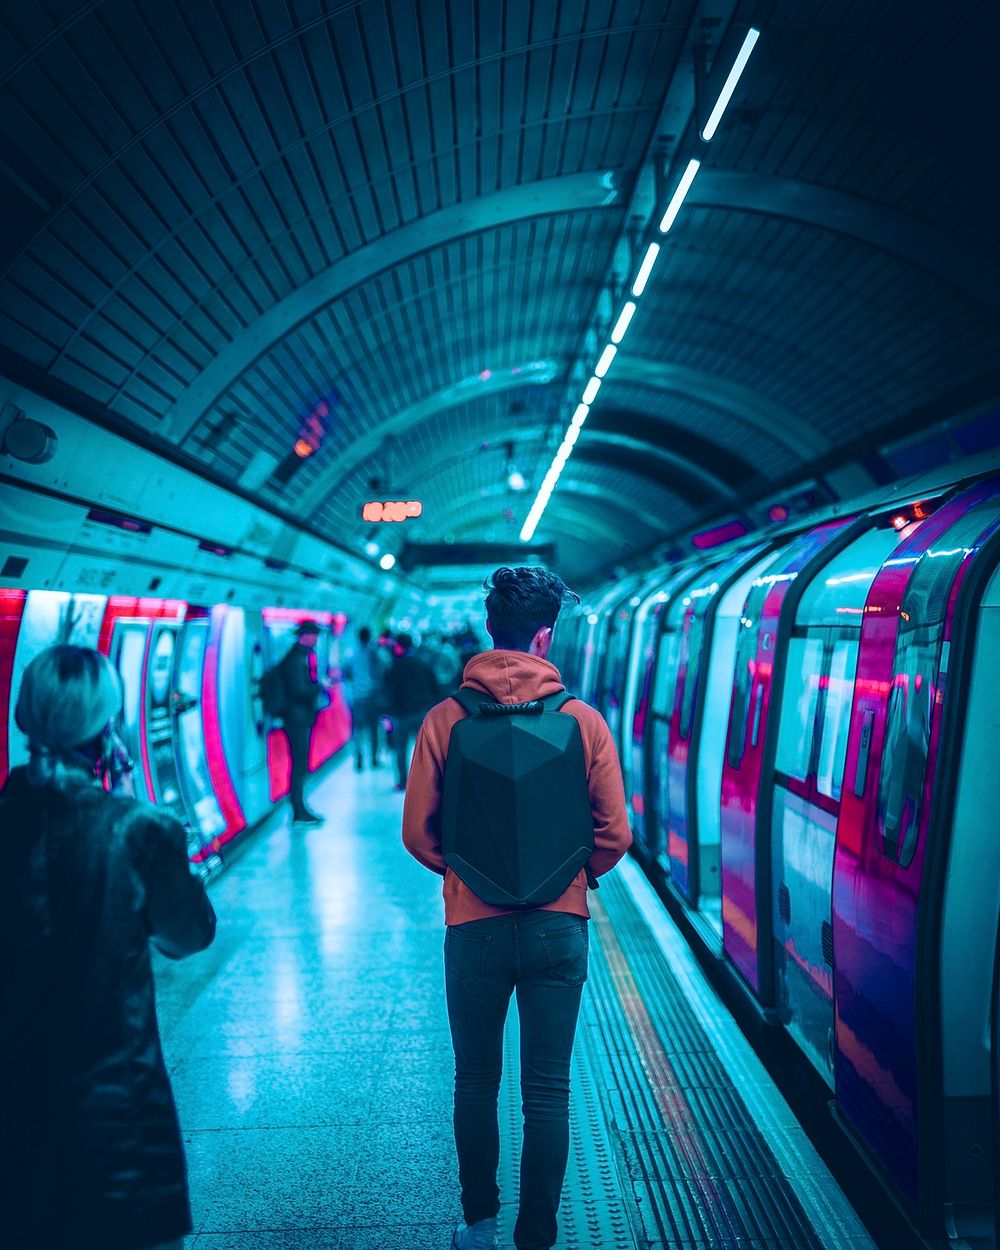 Subway station in London, UK